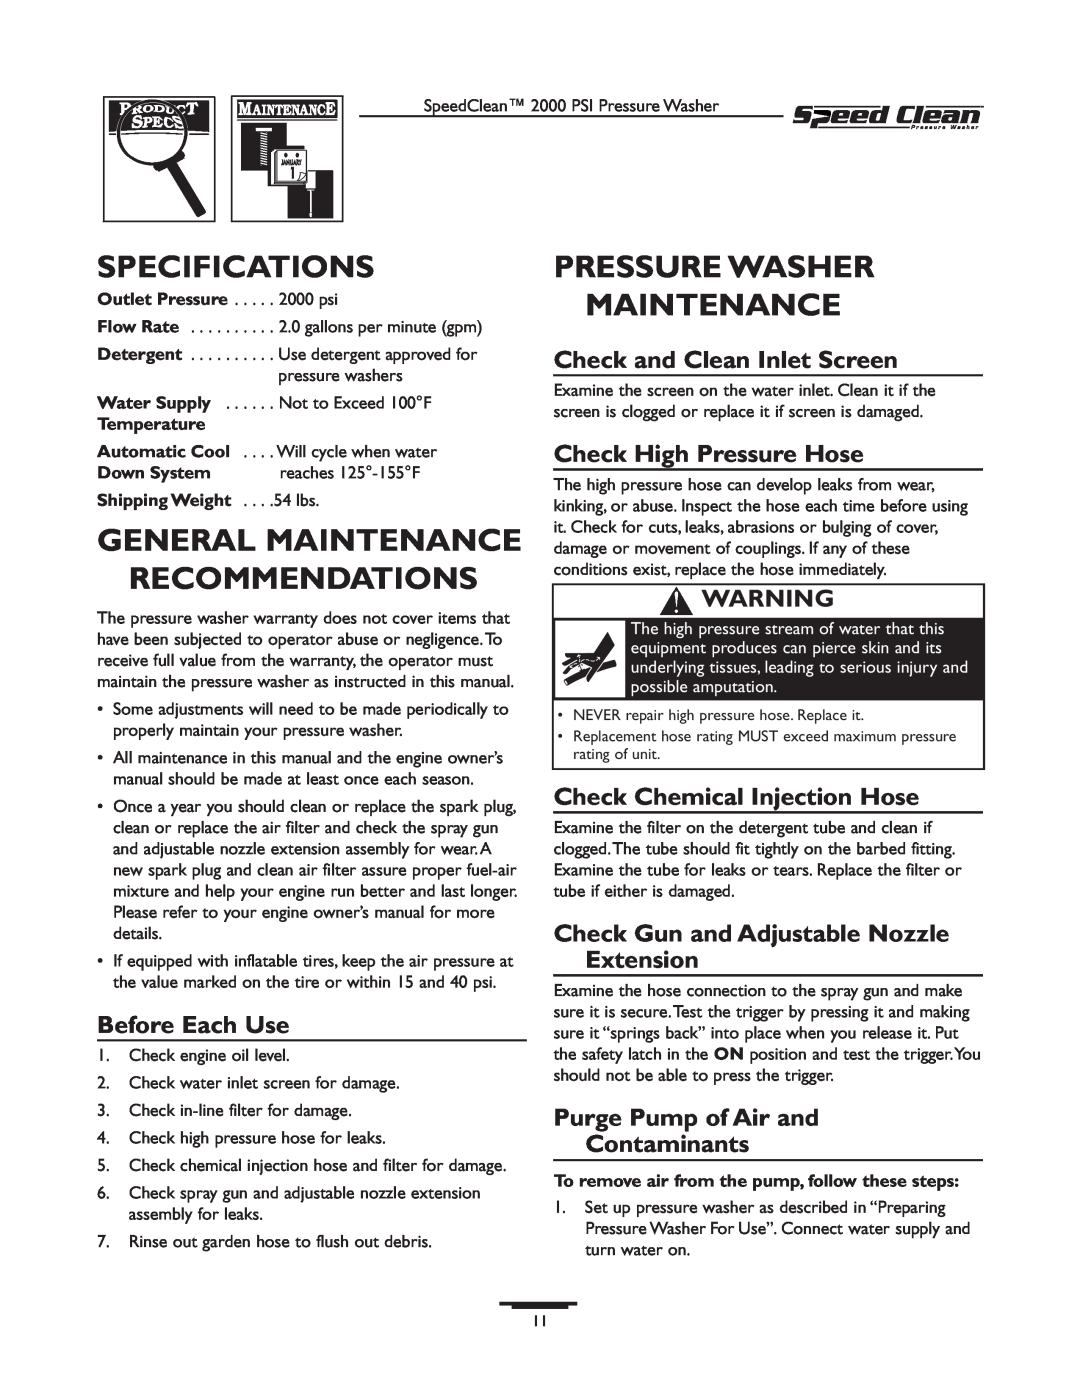 Briggs & Stratton 020211-0 Specifications, General Maintenance Recommendations, Pressure Washer Maintenance, Temperature 